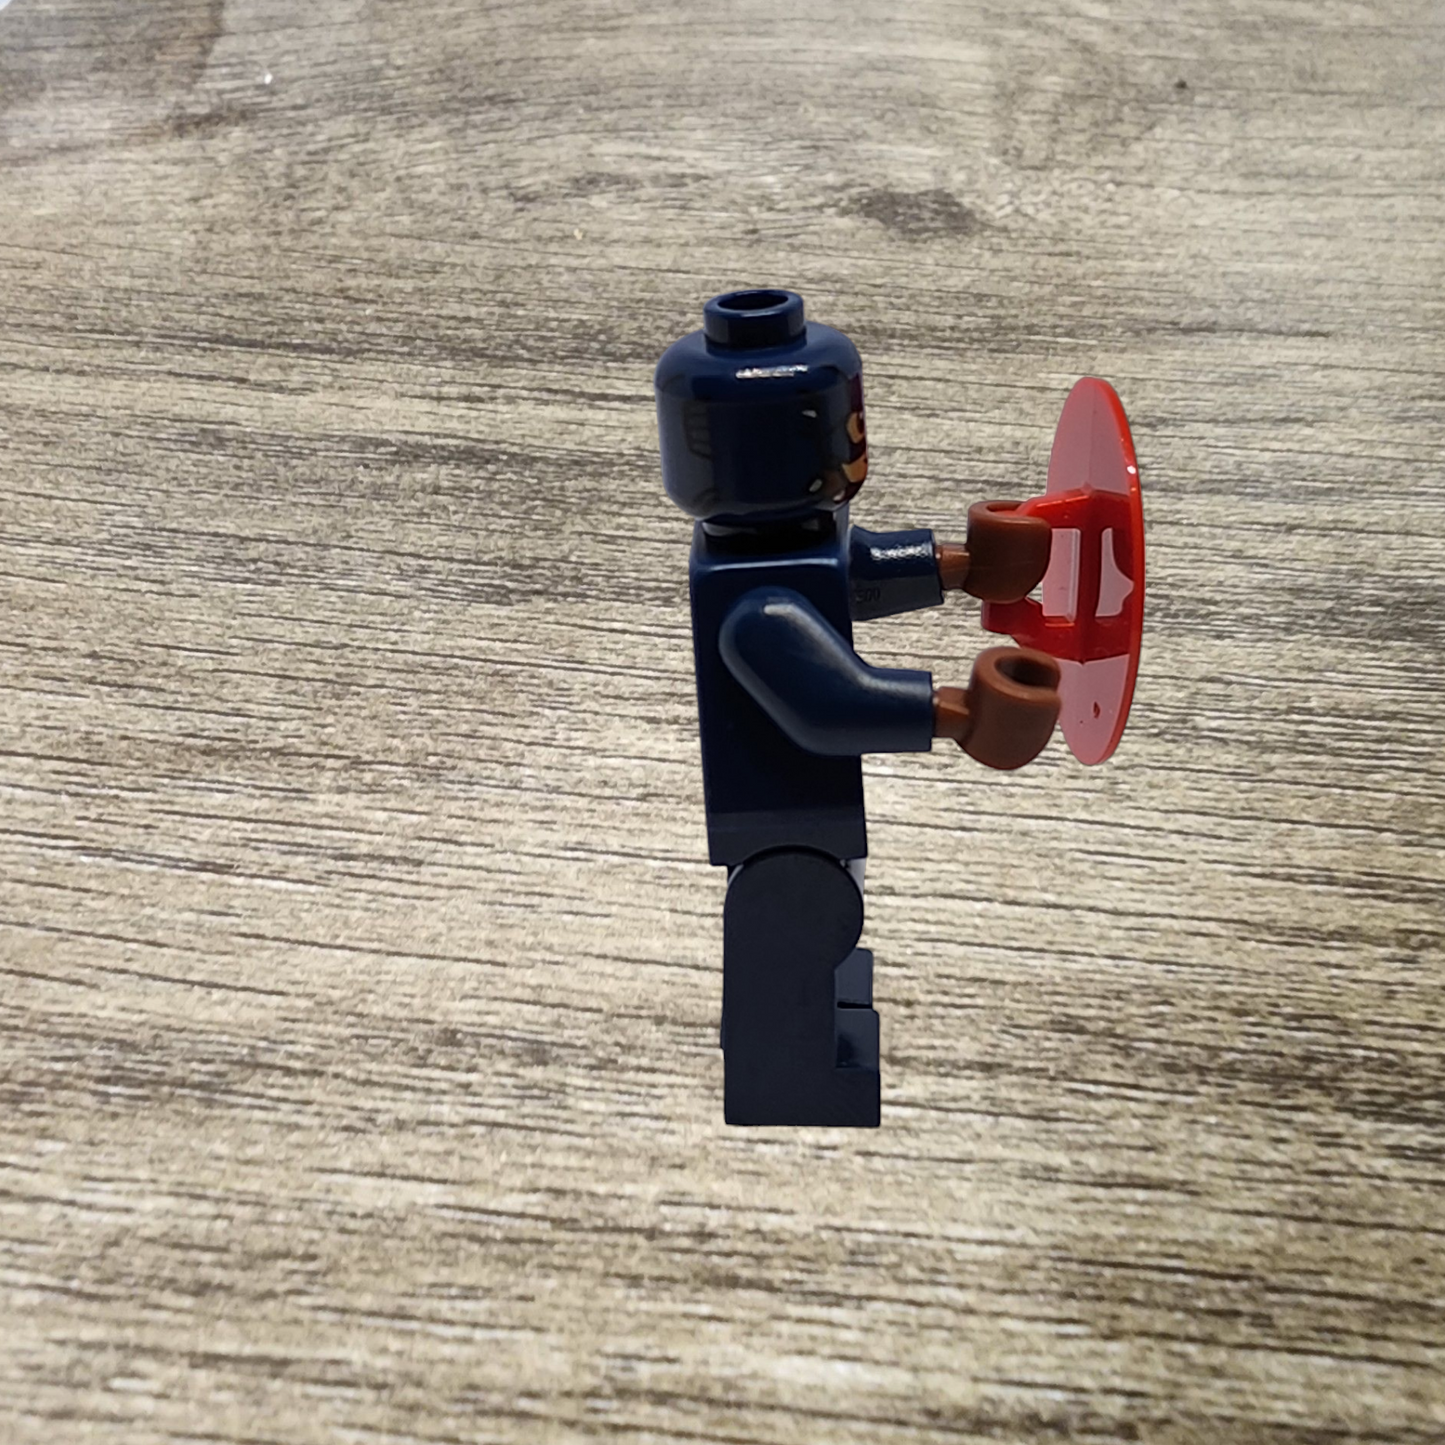 Lego Captain America Minifigure sh177 Dark Blue Suit